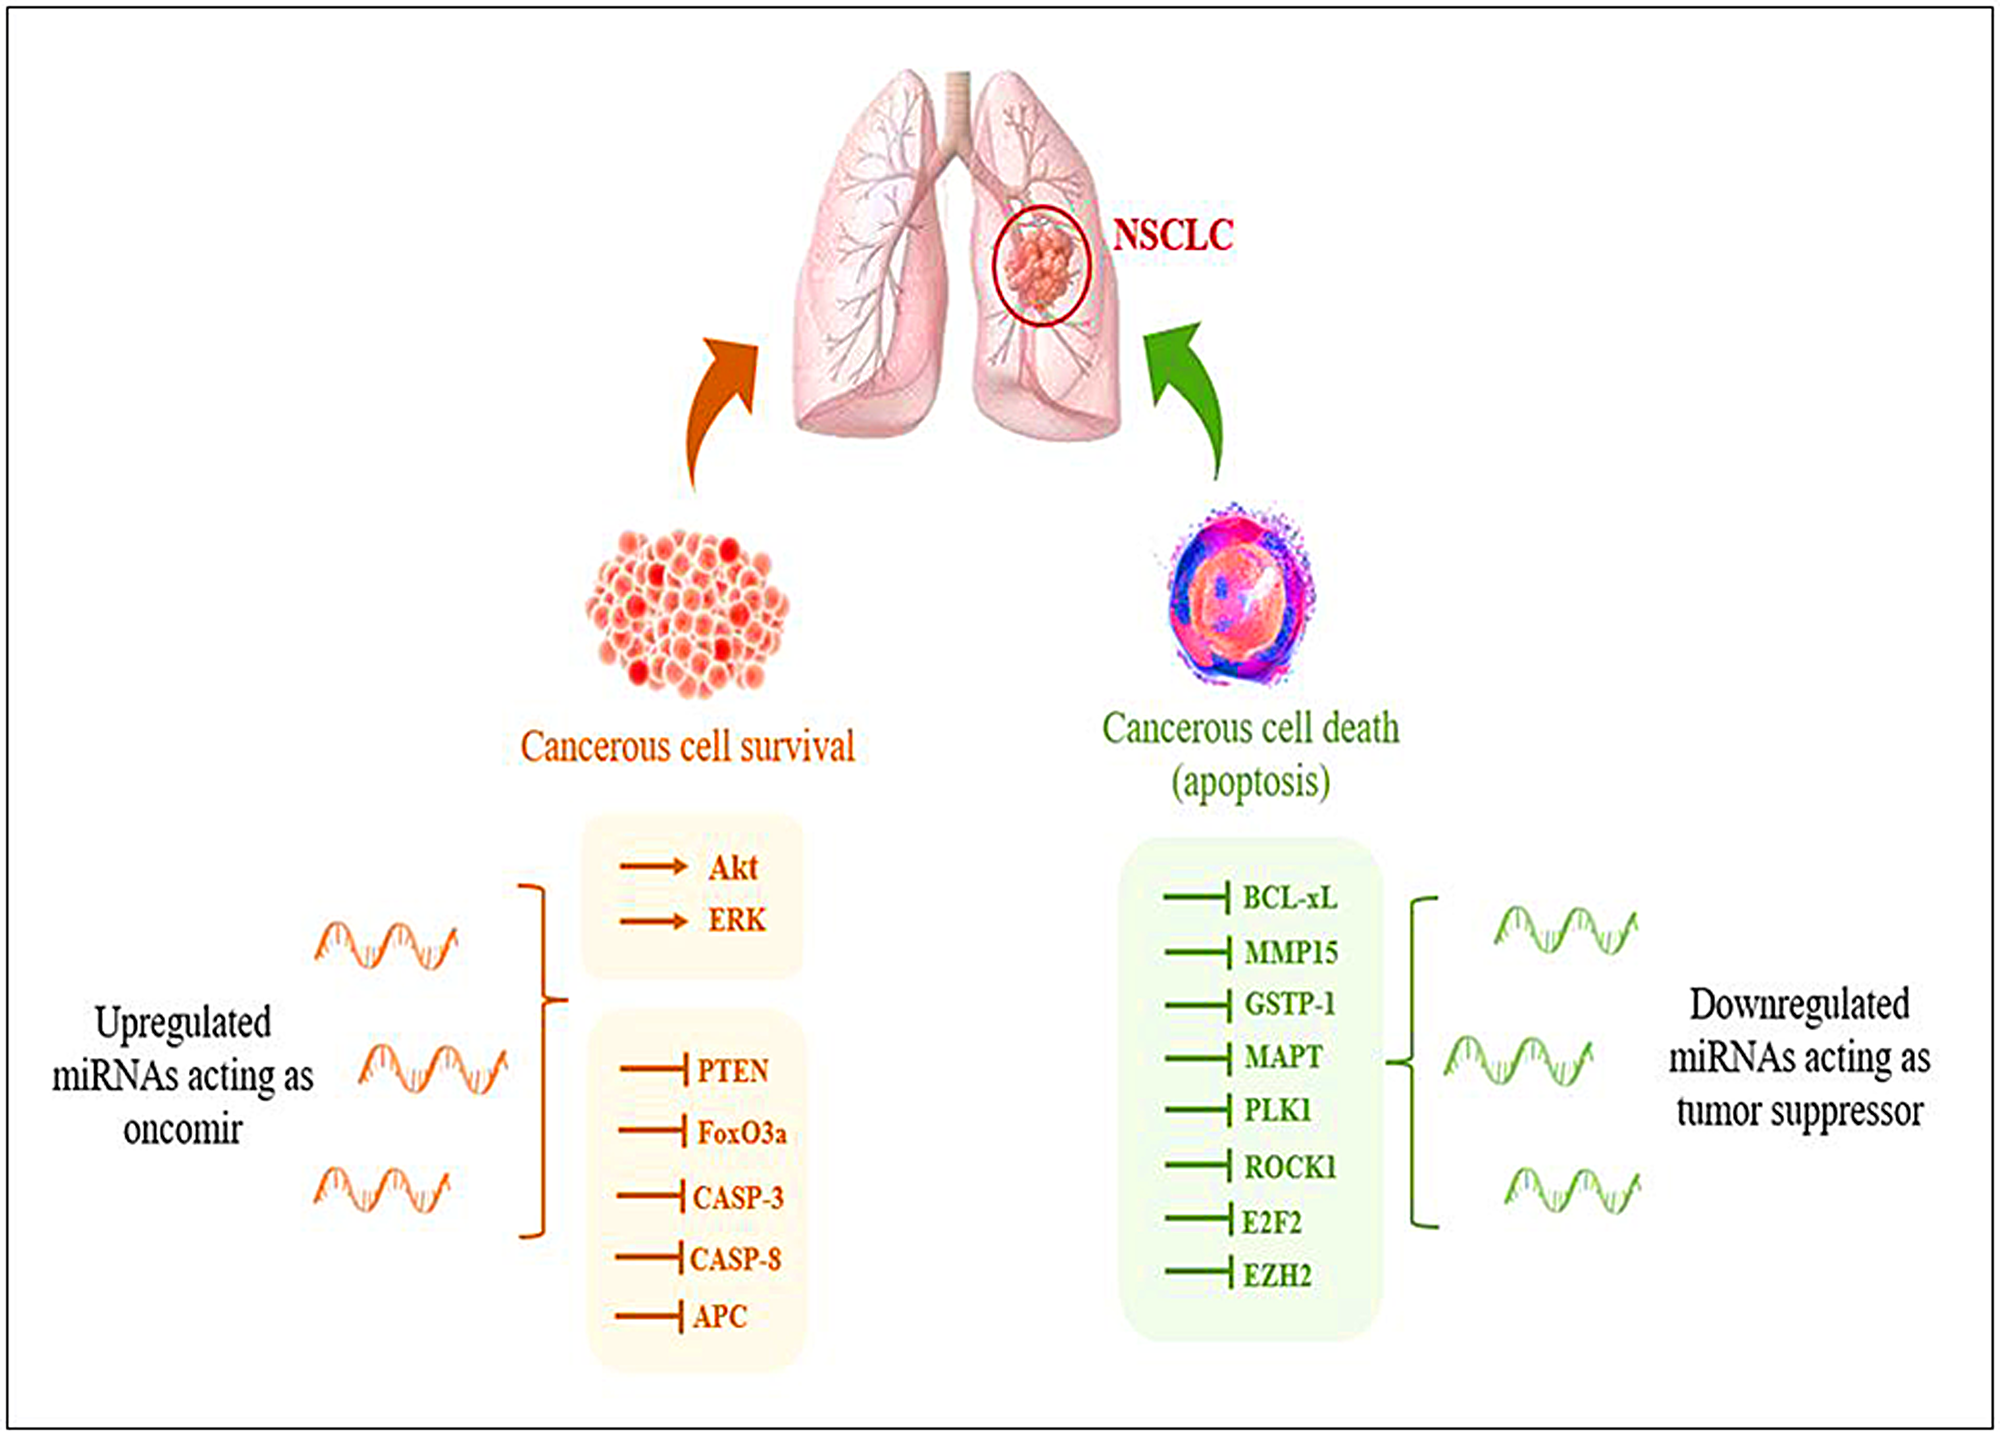 Representation of deregulation of miRNAs during NSCLC aiding in tumor progression.